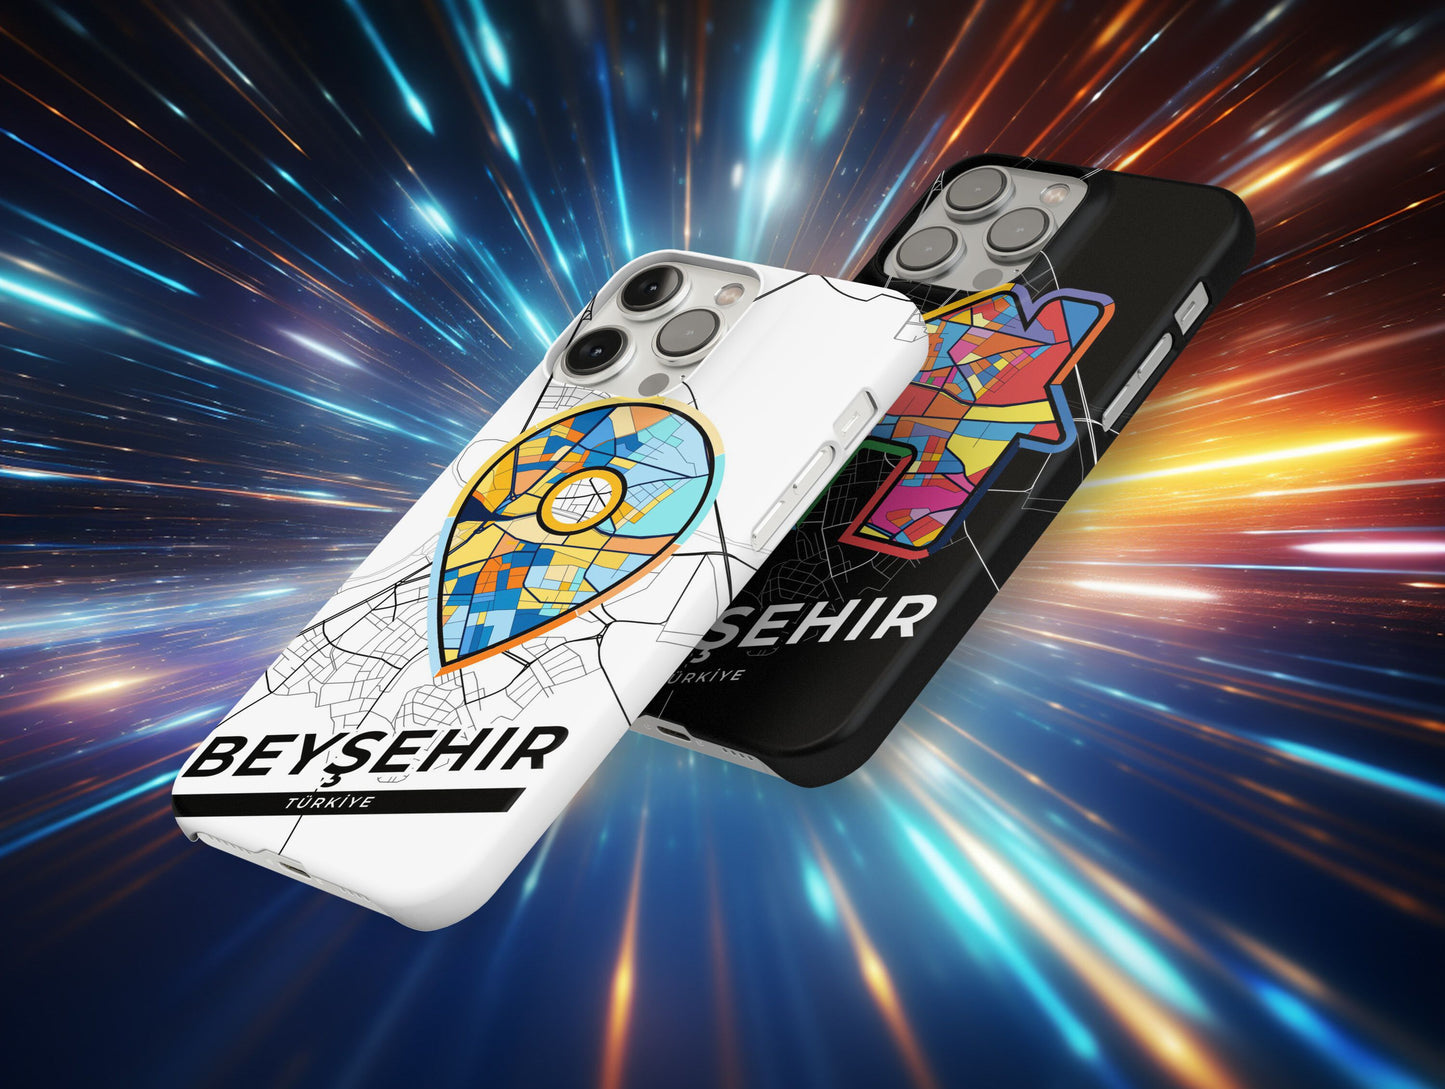 Beyşehir Turkey slim phone case with colorful icon. Birthday, wedding or housewarming gift. Couple match cases.